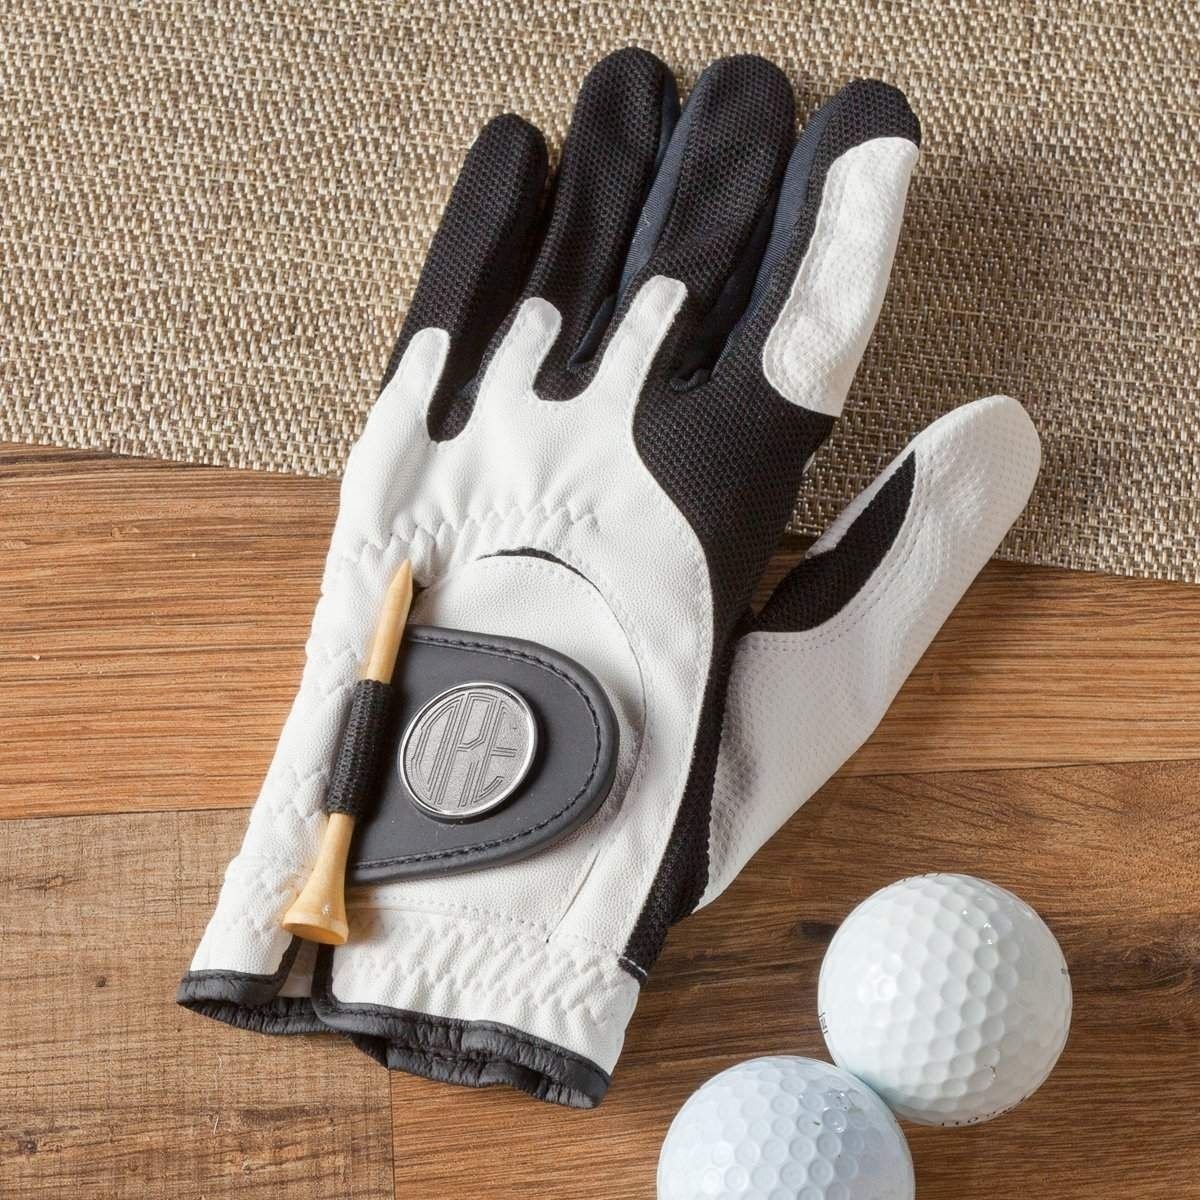 10 Best Golf Gift Ideas For Men golf gifts for men gifts for golfers golf gift ideas personalized 2022